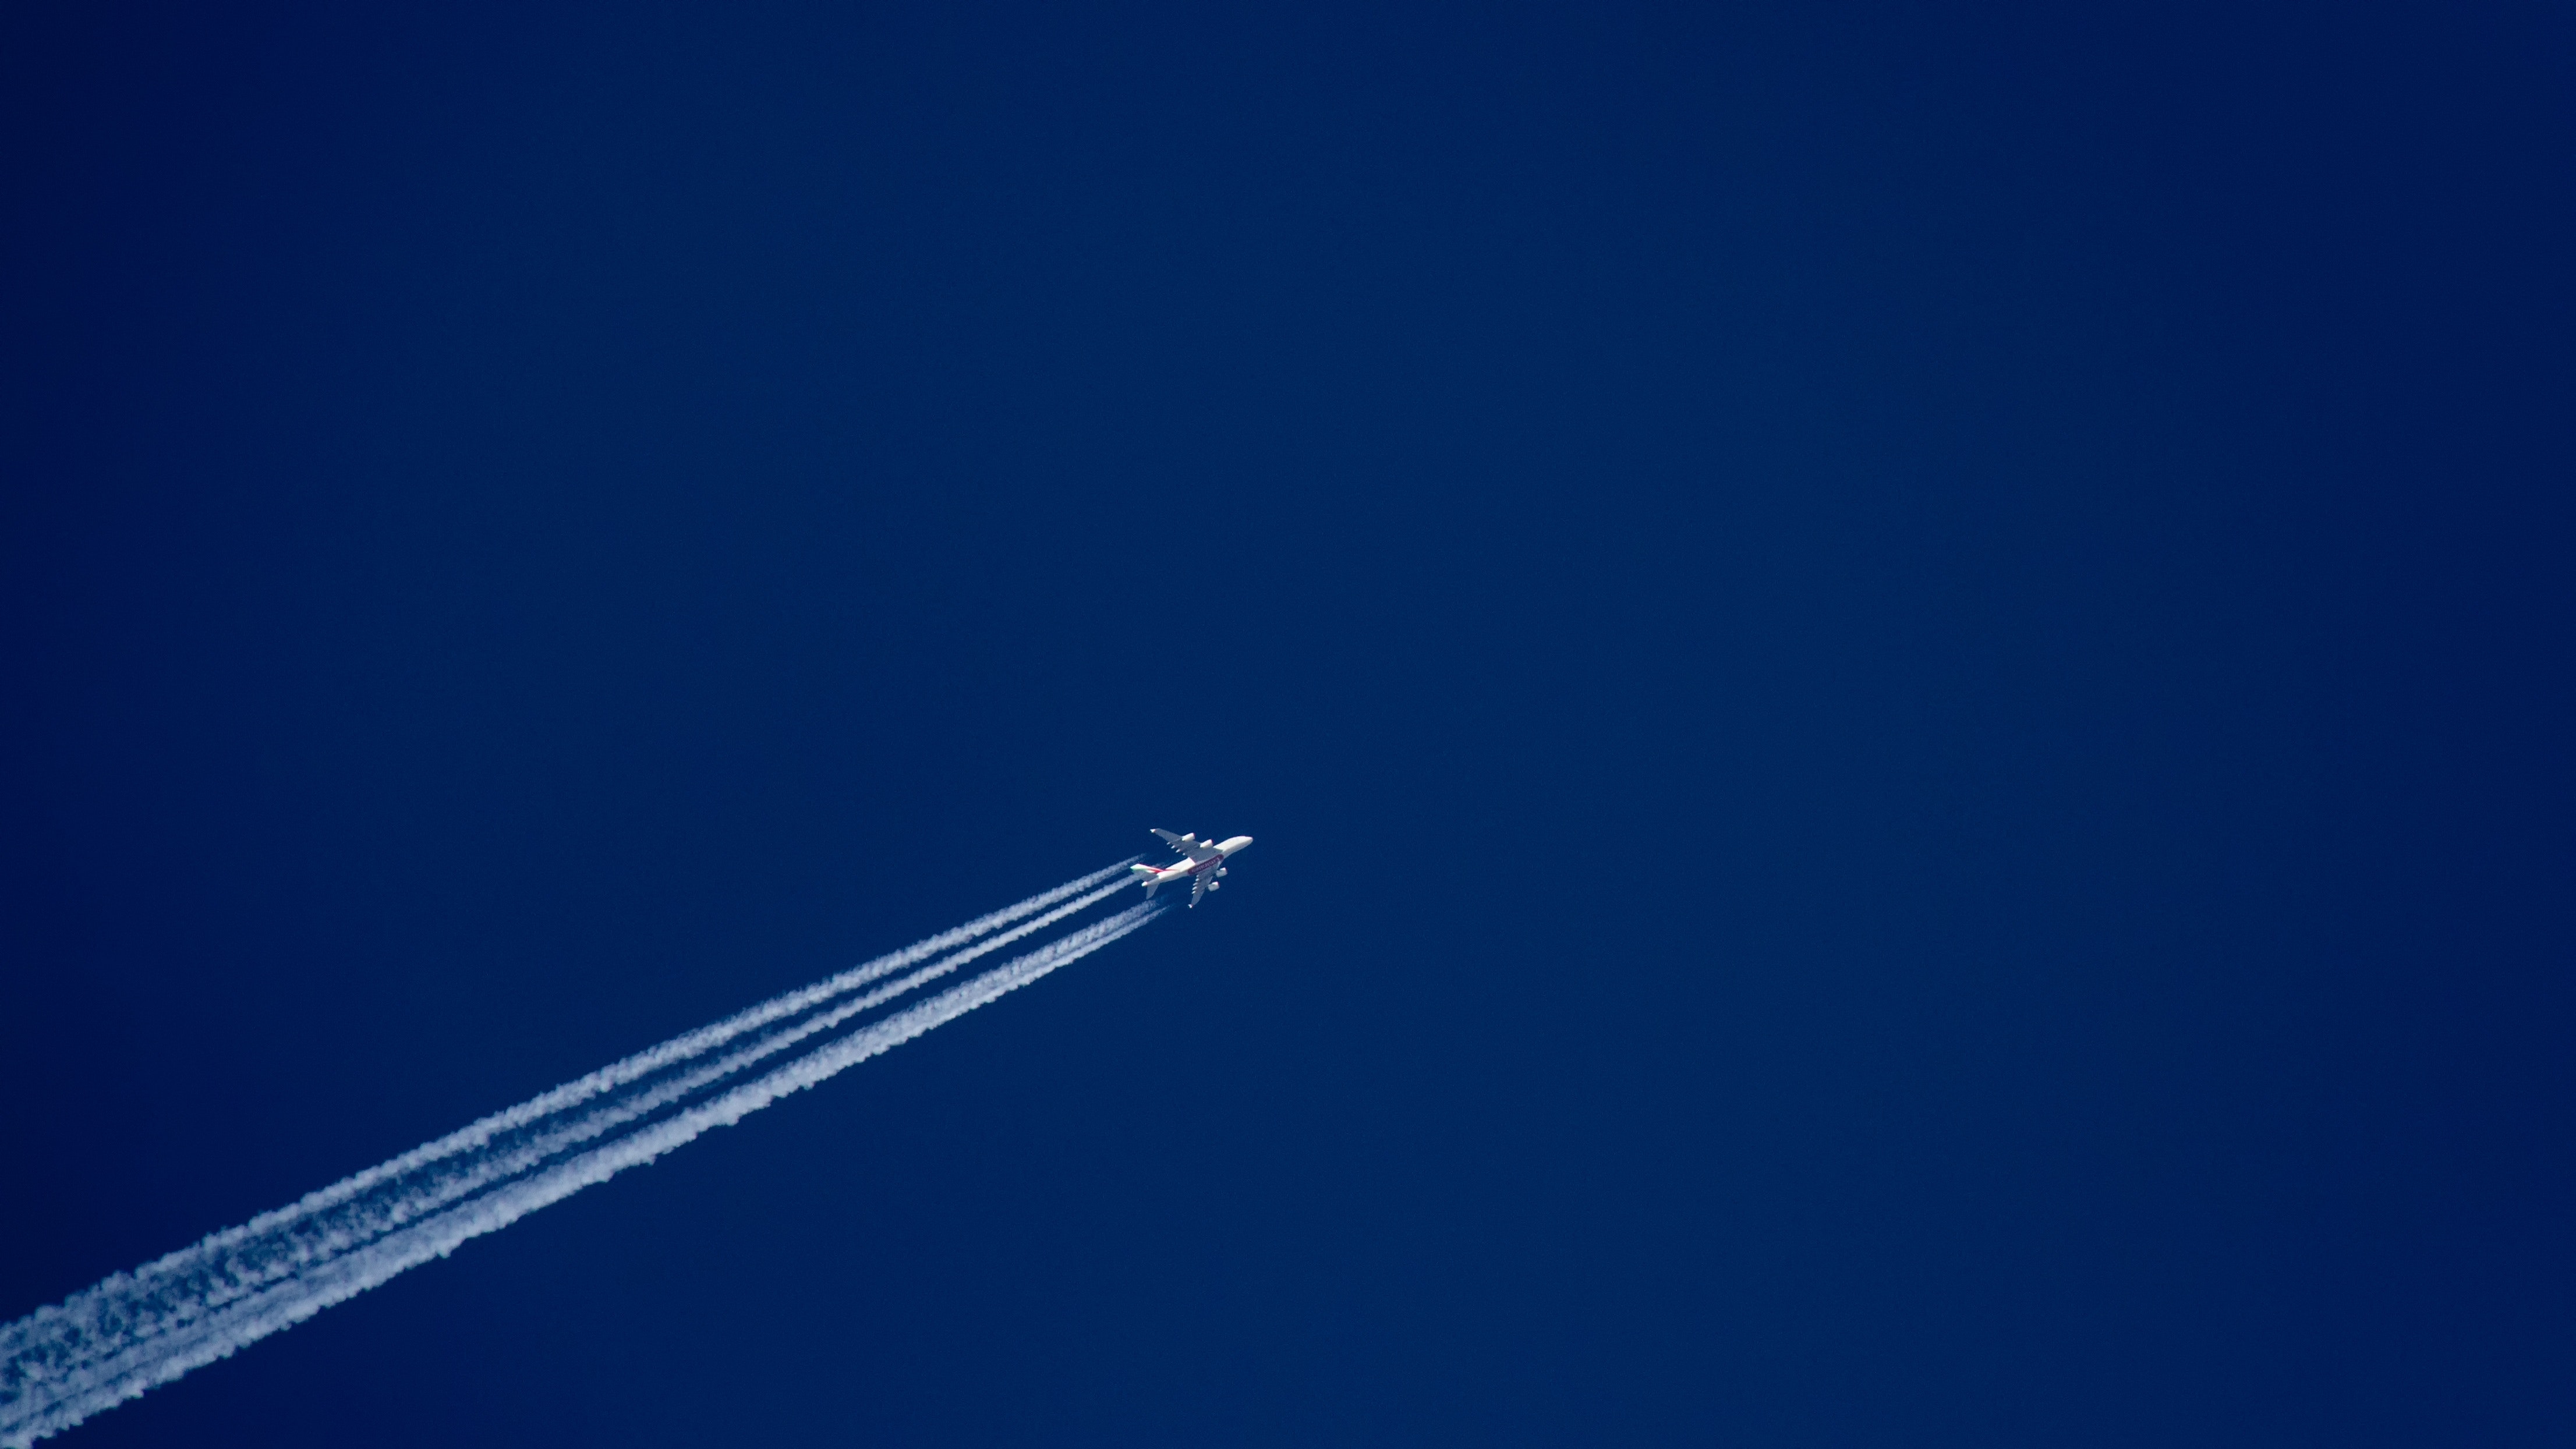 Plane On The Blue Sky - 4424x2489 Wallpaper 